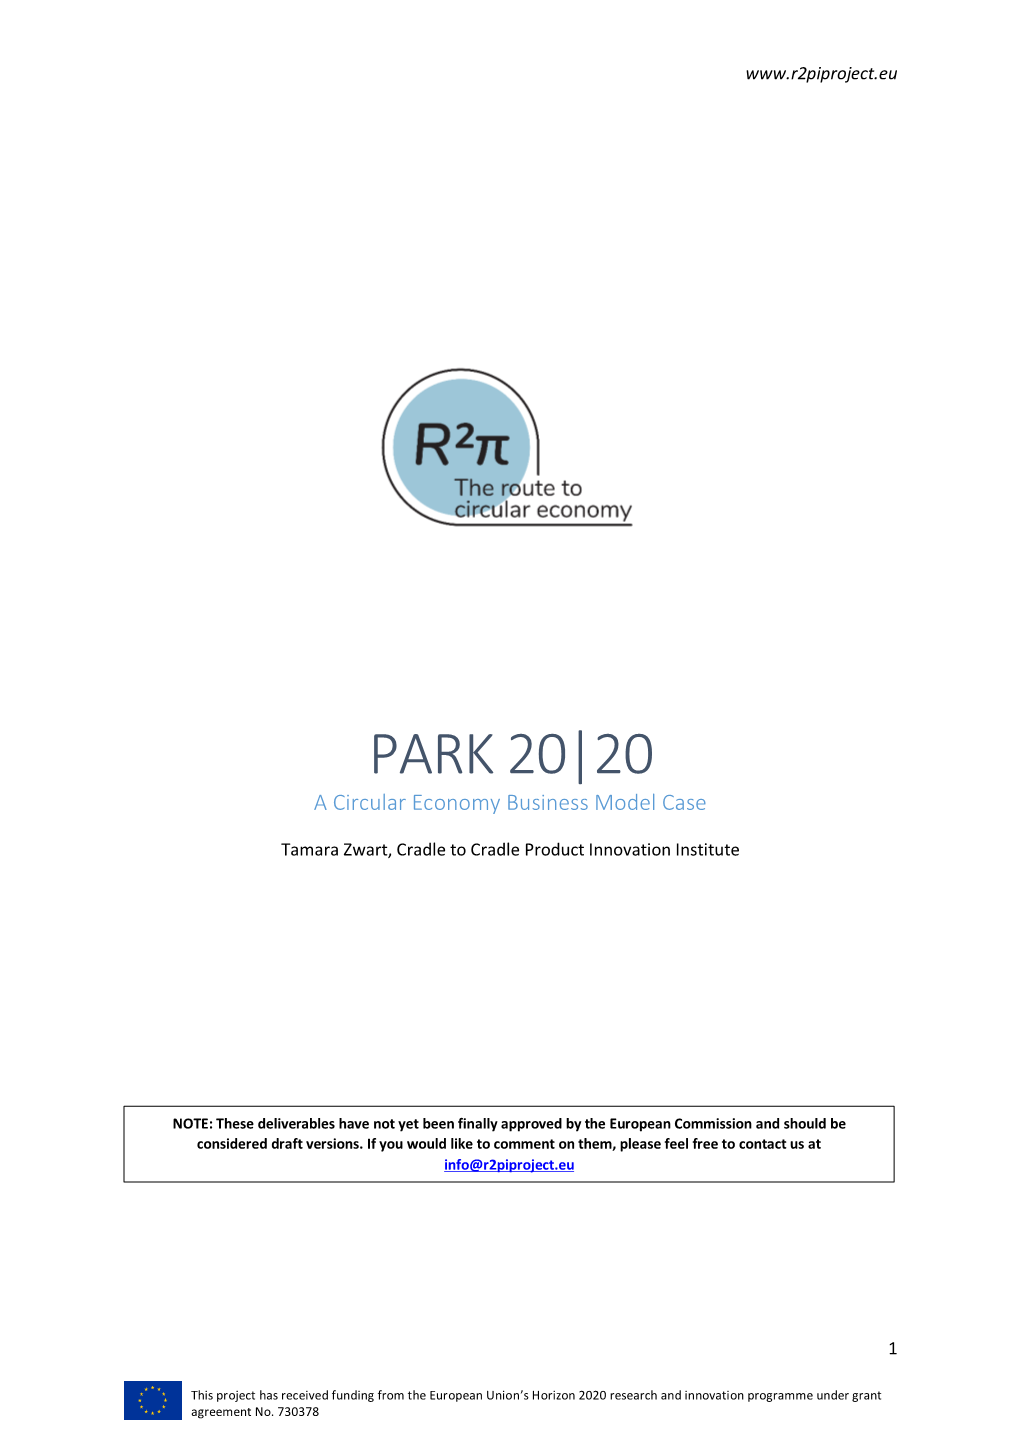 PARK 20|20 a Circular Economy Business Model Case